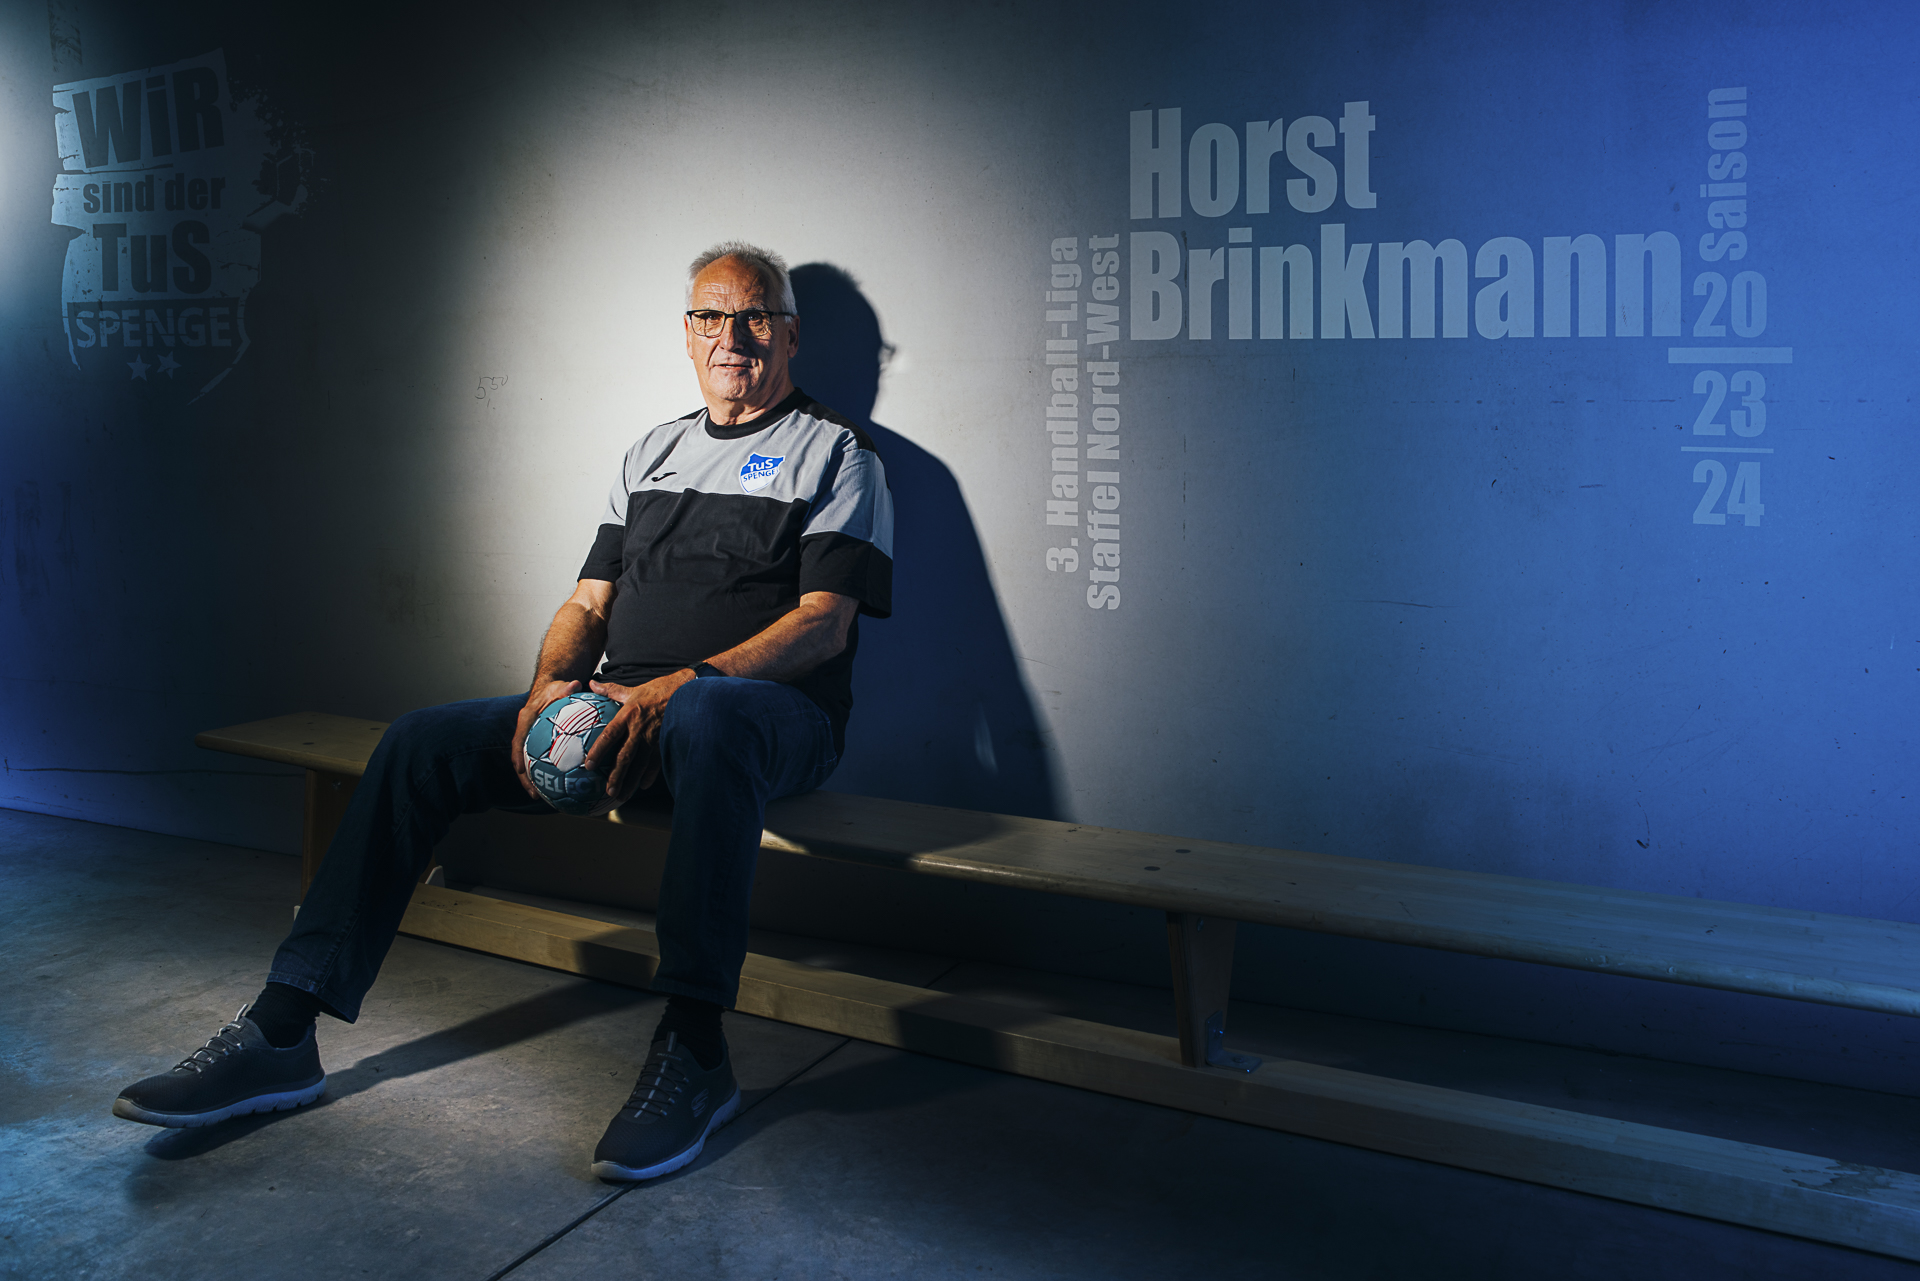 Horst Brinkmann